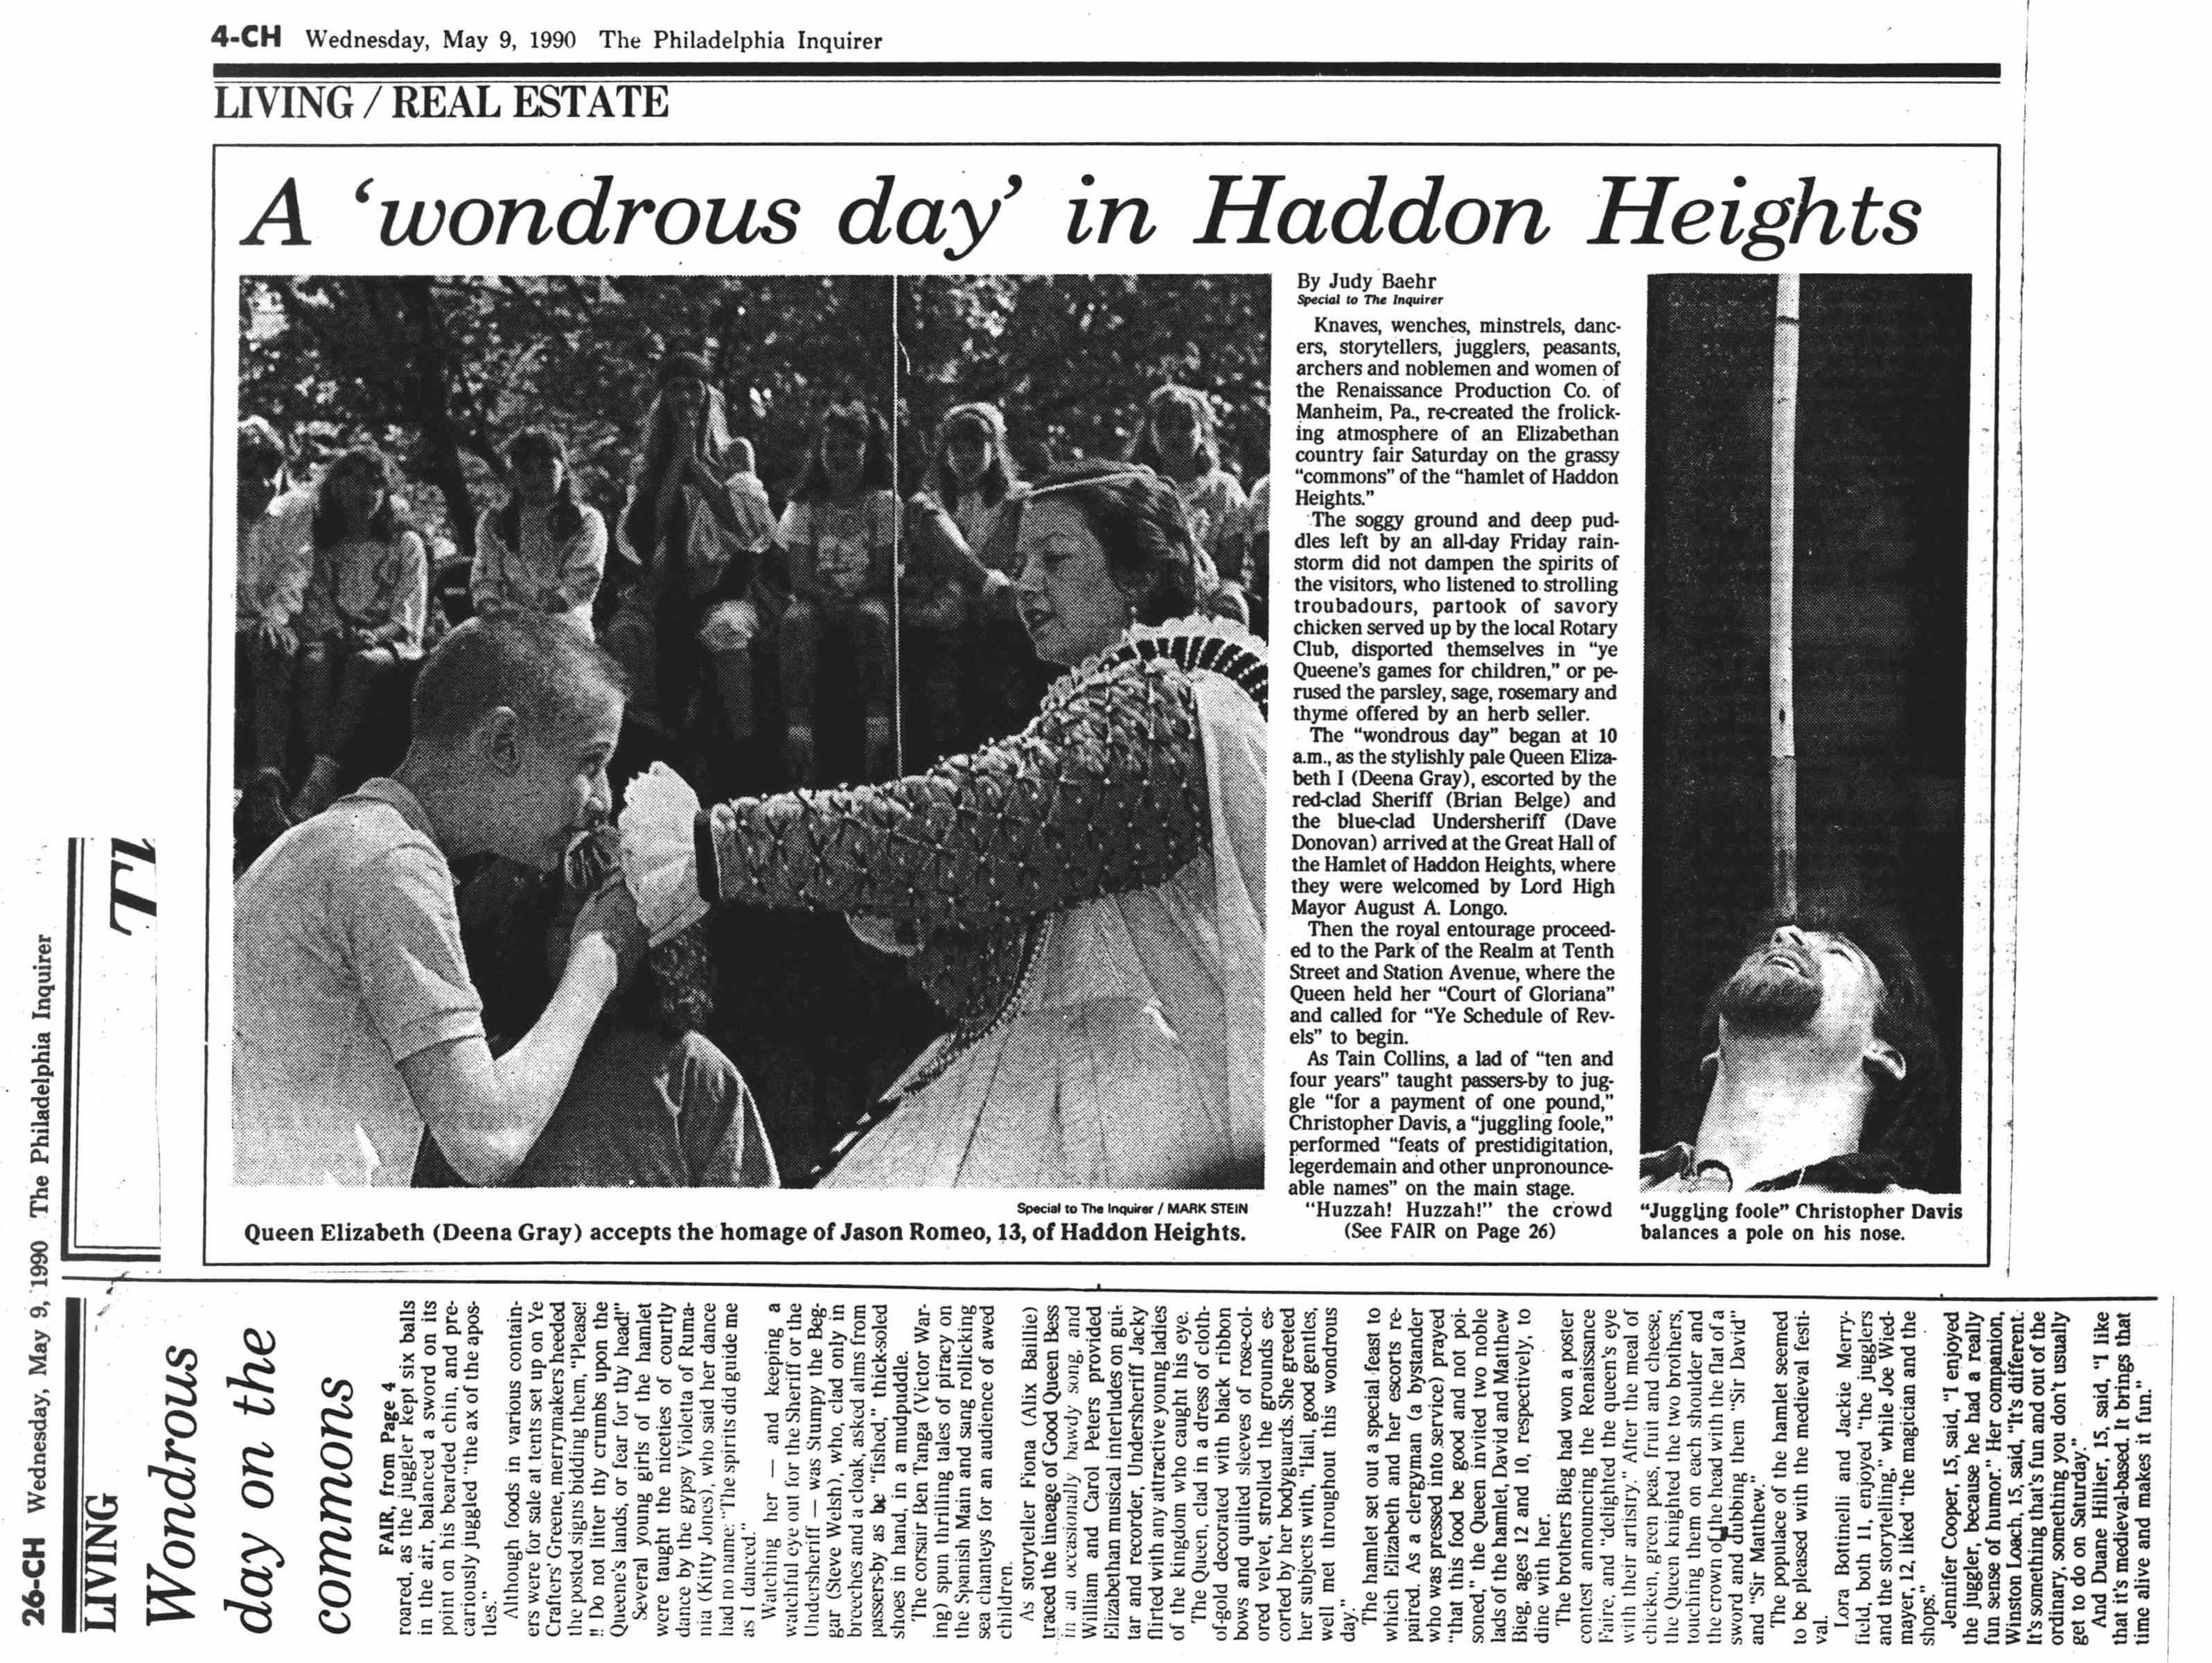 Wondrous-Day-Haddon-Heights-article